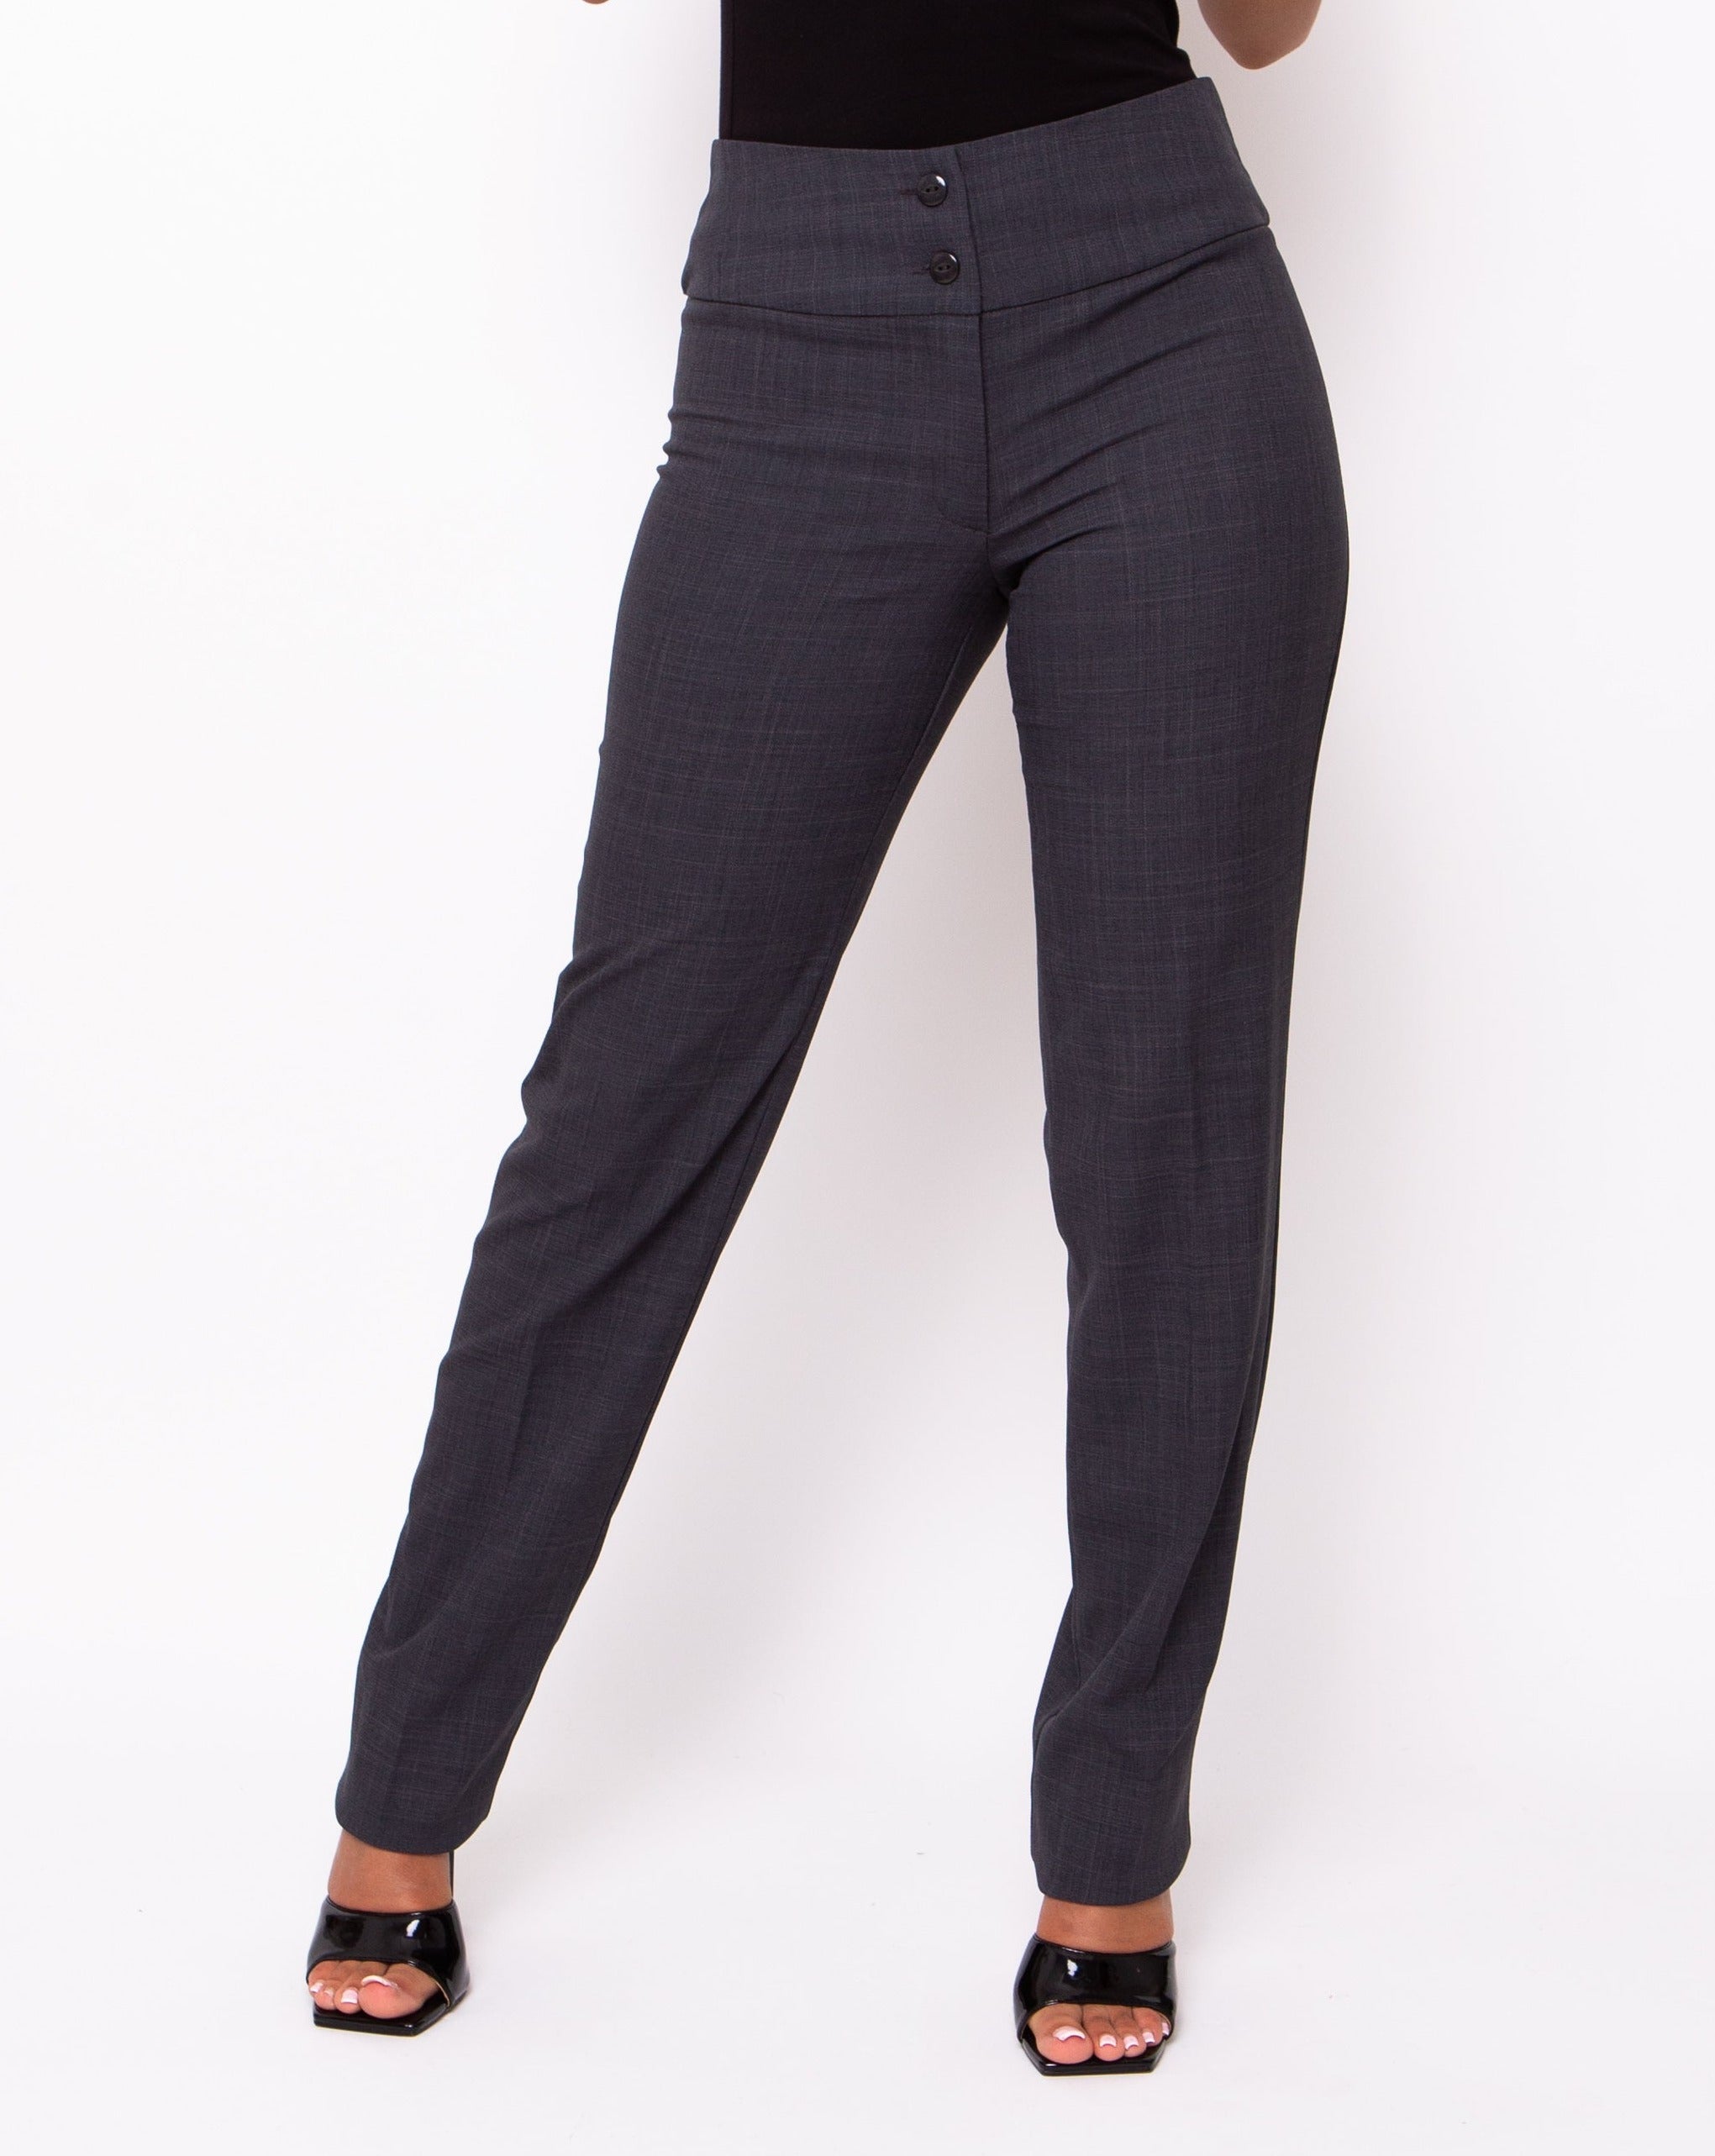 SUISTUDIO Grey Trousers Womens UK 14 Pinstriped Wool Tapered Fit | eBay